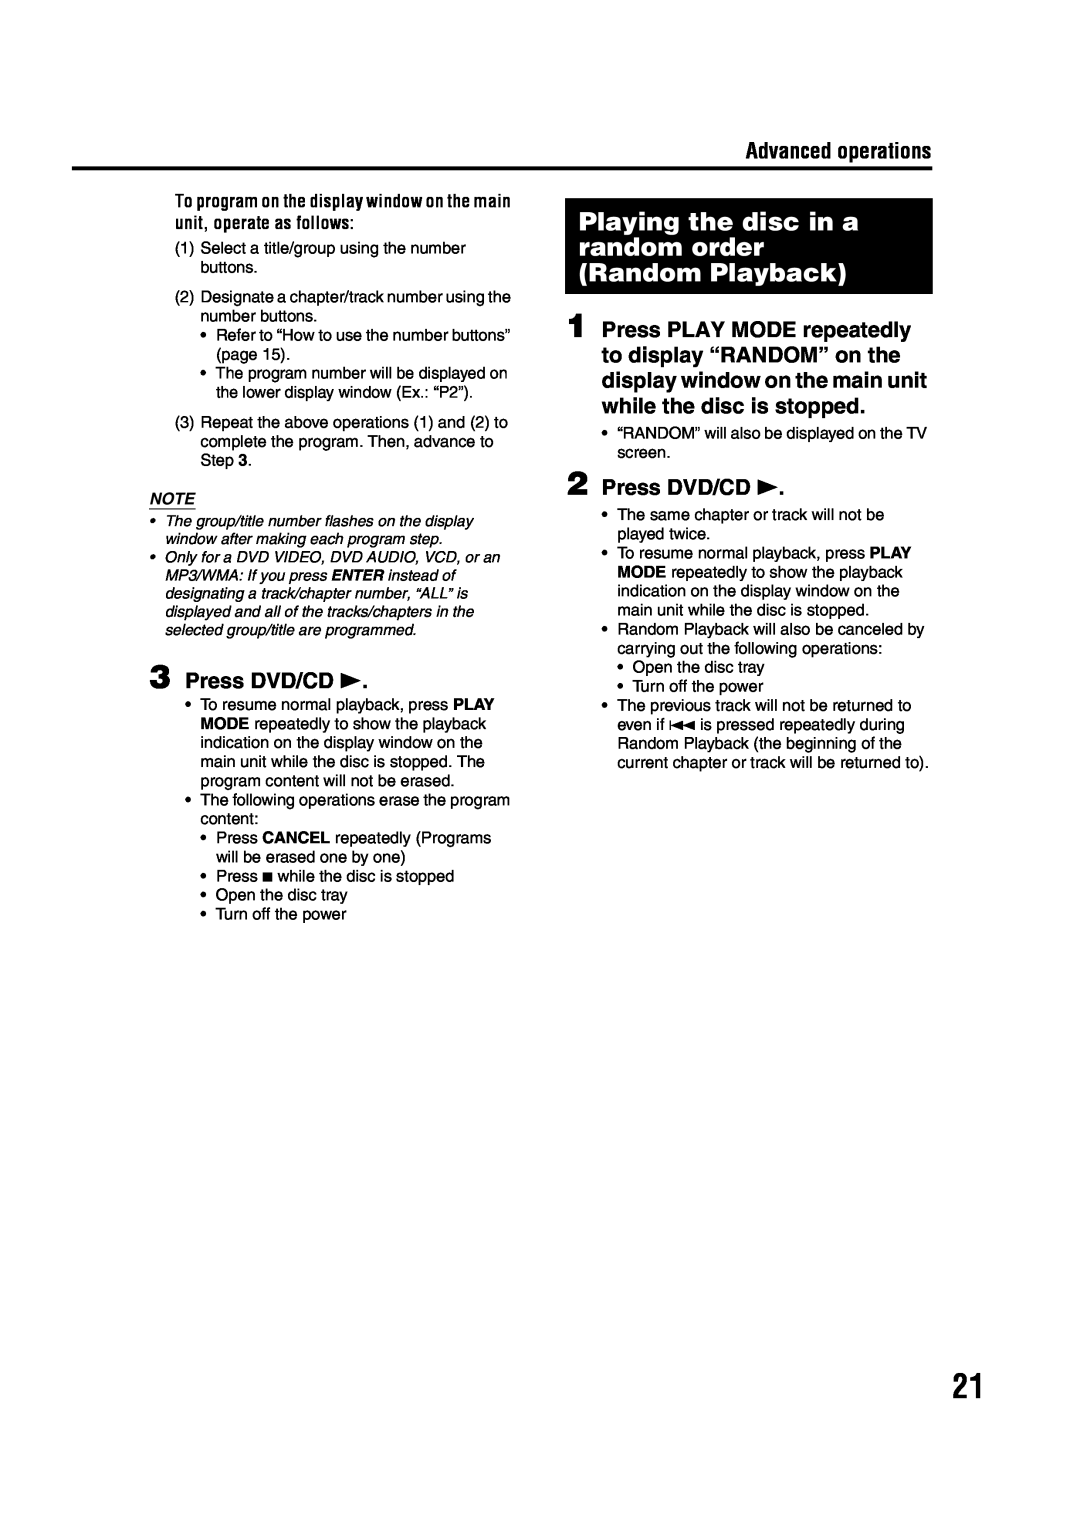 JVC GVT0142-001A manual Press DVD/CD, Advanced operations 